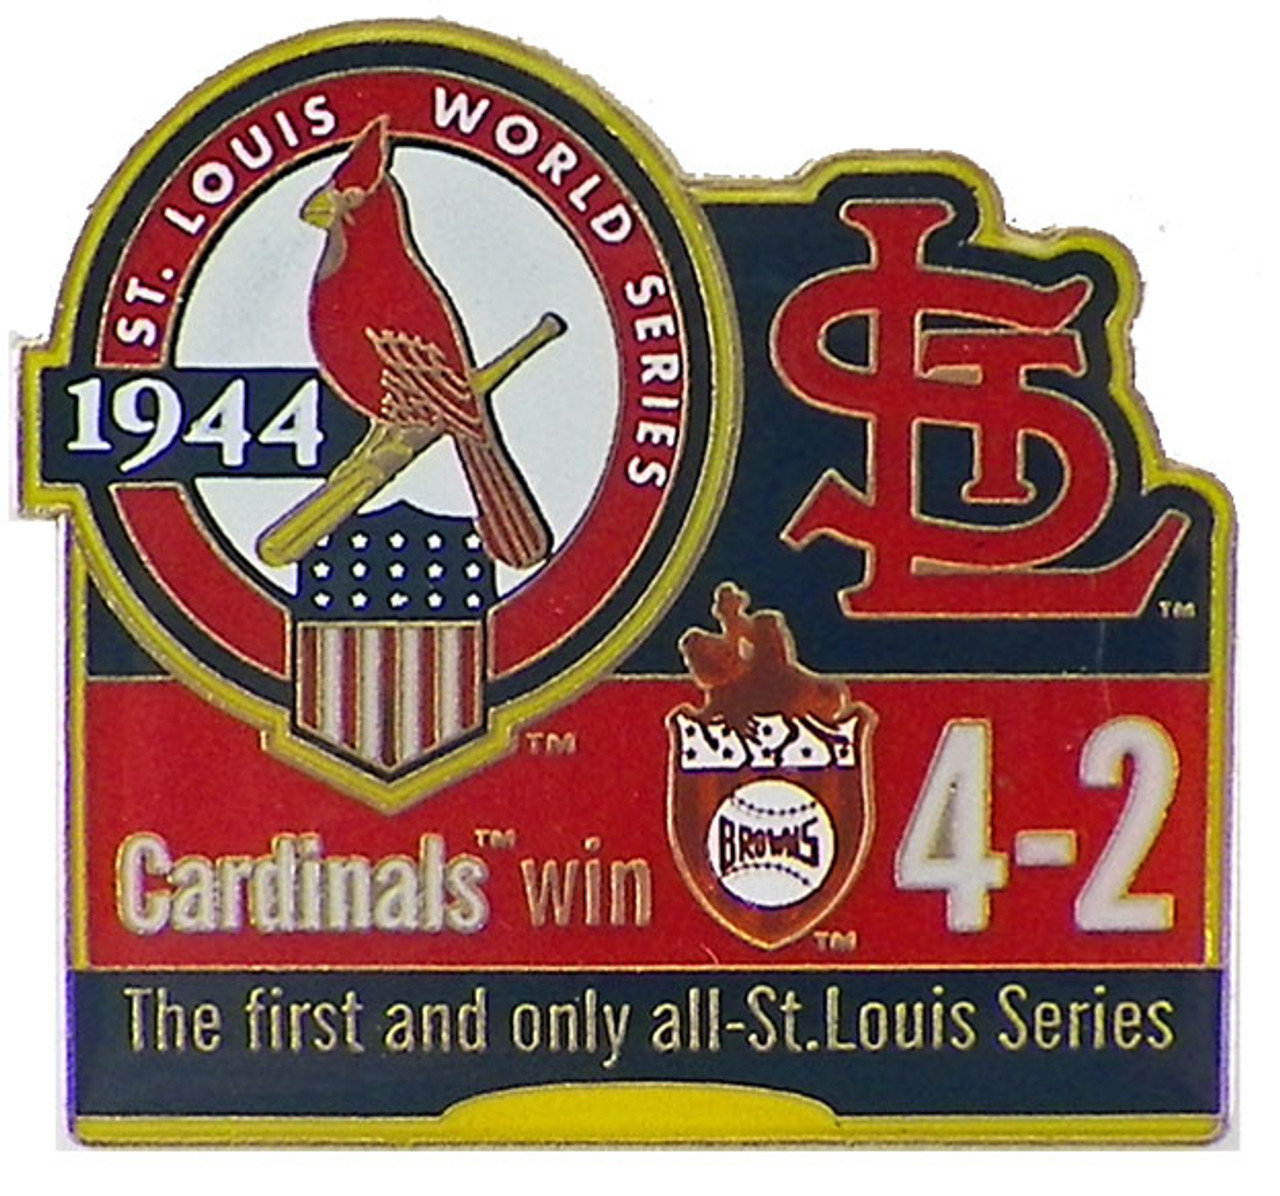 1944 World Series Commemorative Pin - Cardinals vs. Browns